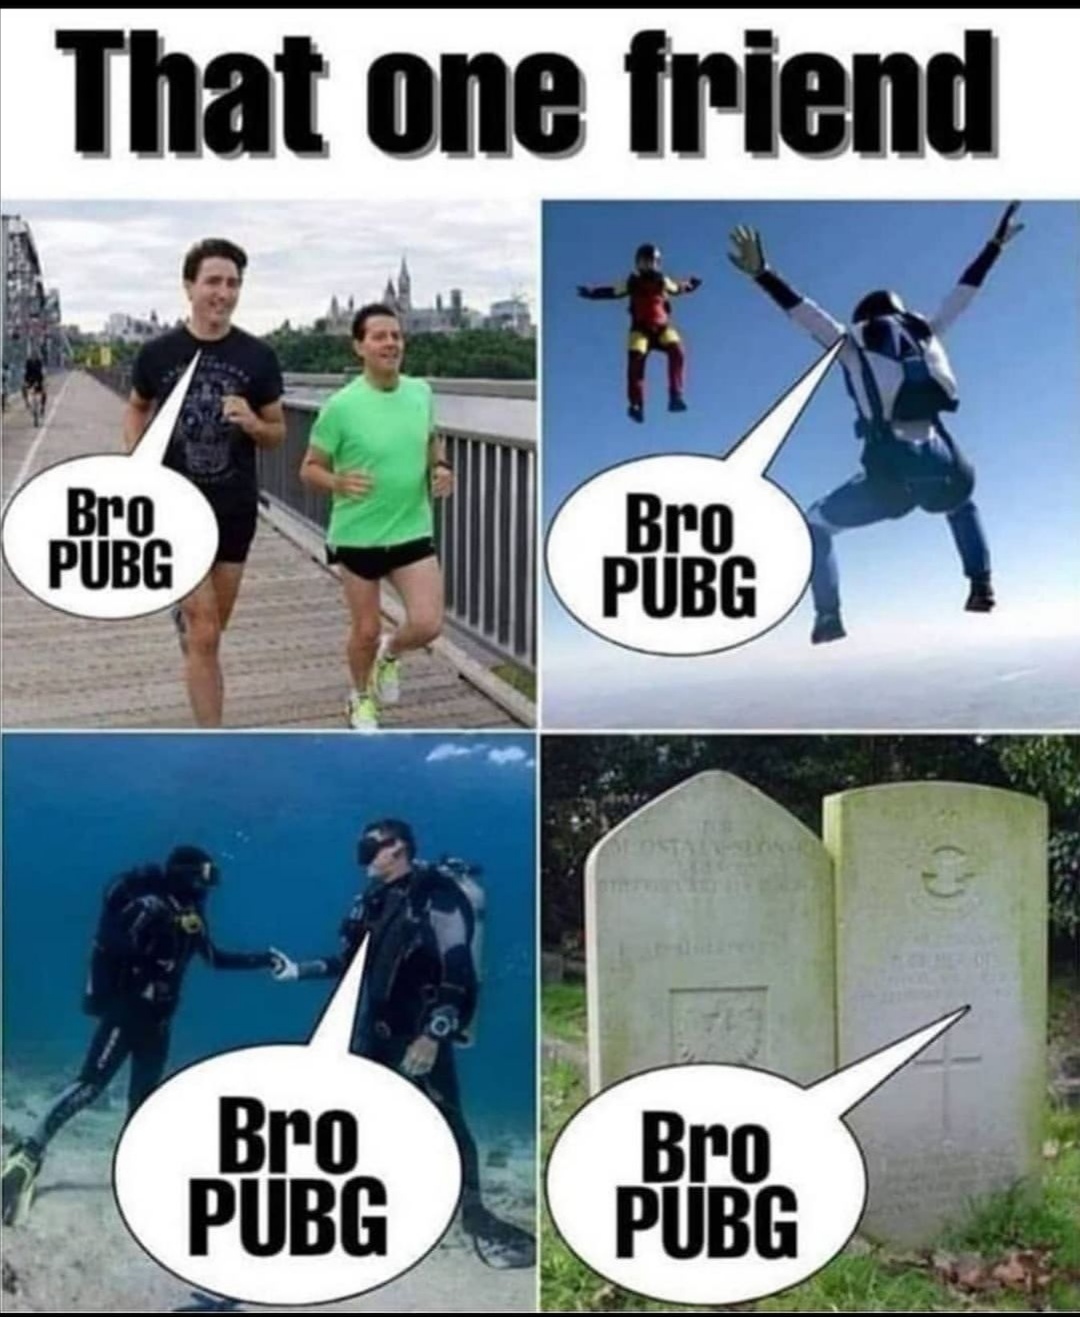 Bro pubg🤣🤣🤣